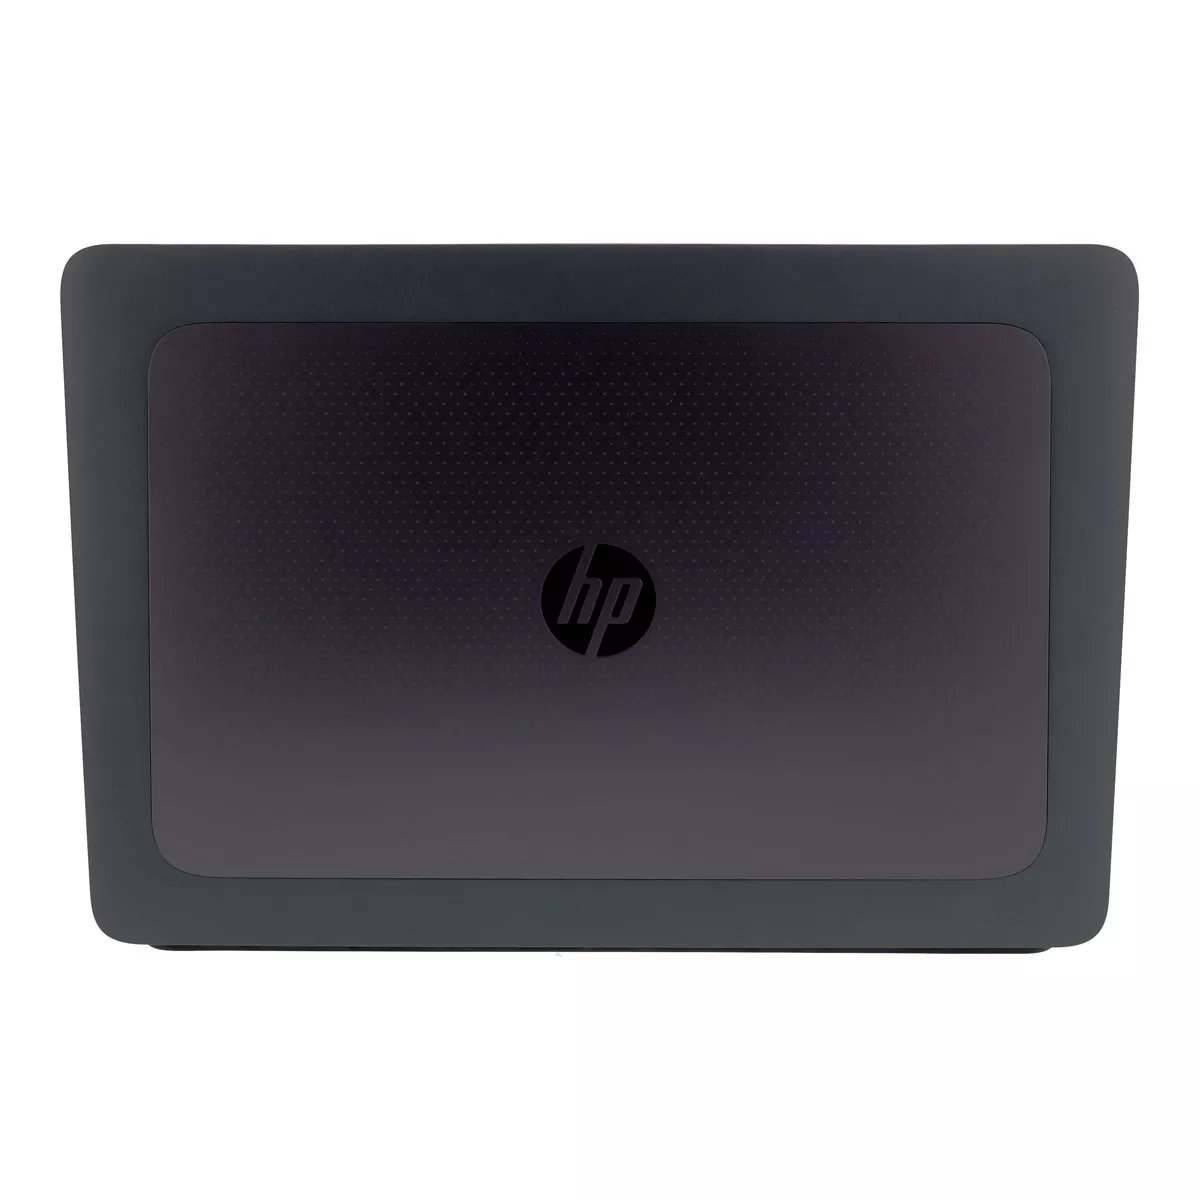 HP ZBook 15 G4 Core i7 7820HQ nVidia Quadro M1200M 16 GB 240 GB M.2 SSD Webcam A